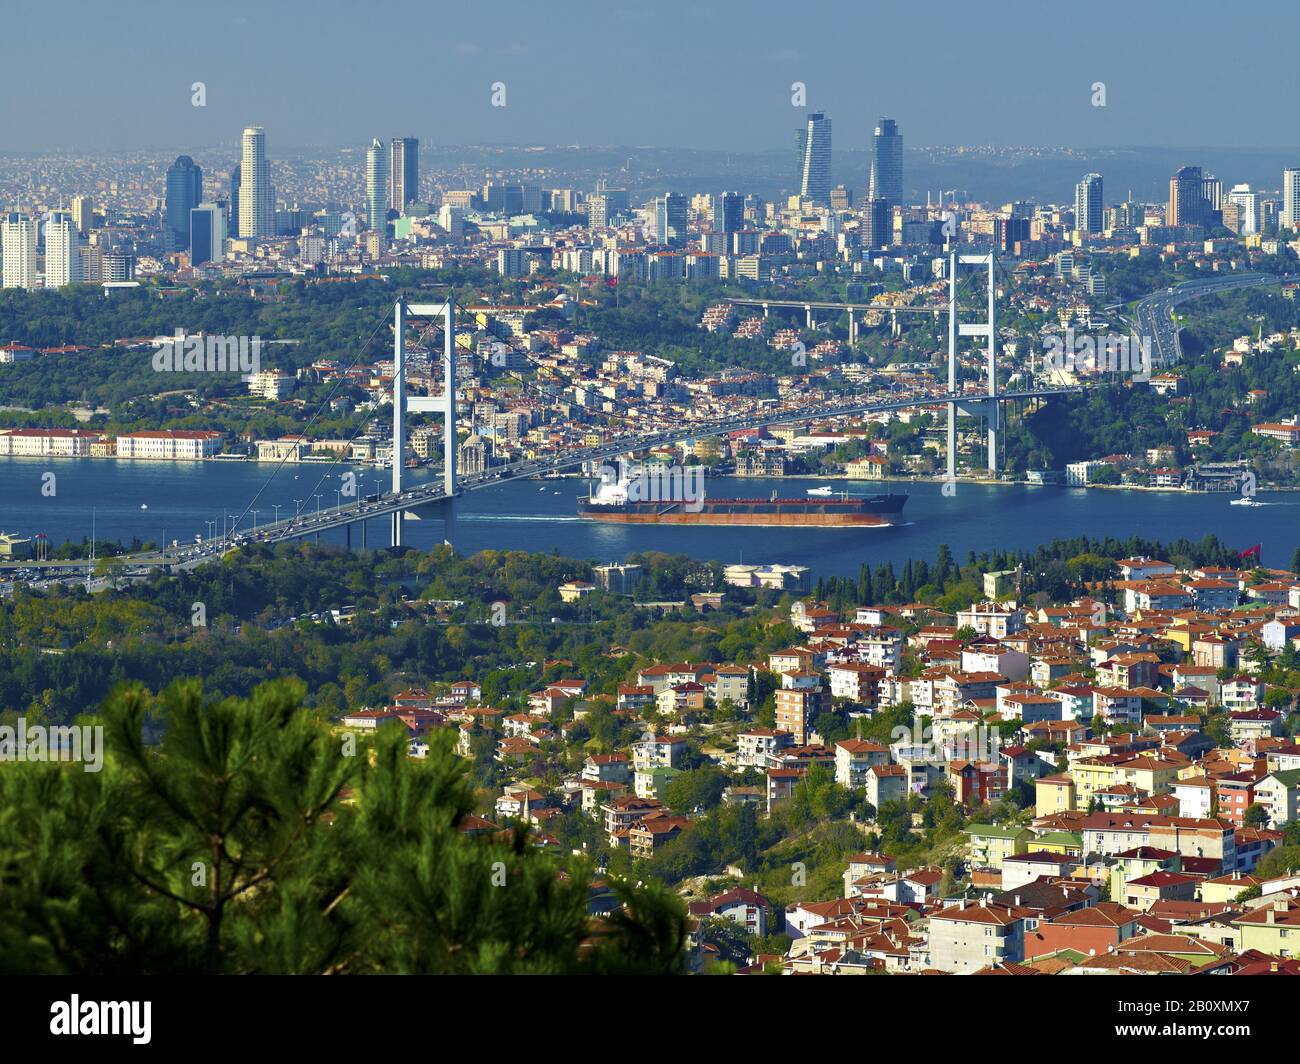 View from Camlica Kumpir over Bosporus Bridge with district Ortaköy, Istanbul, Turkey, Stock Photo